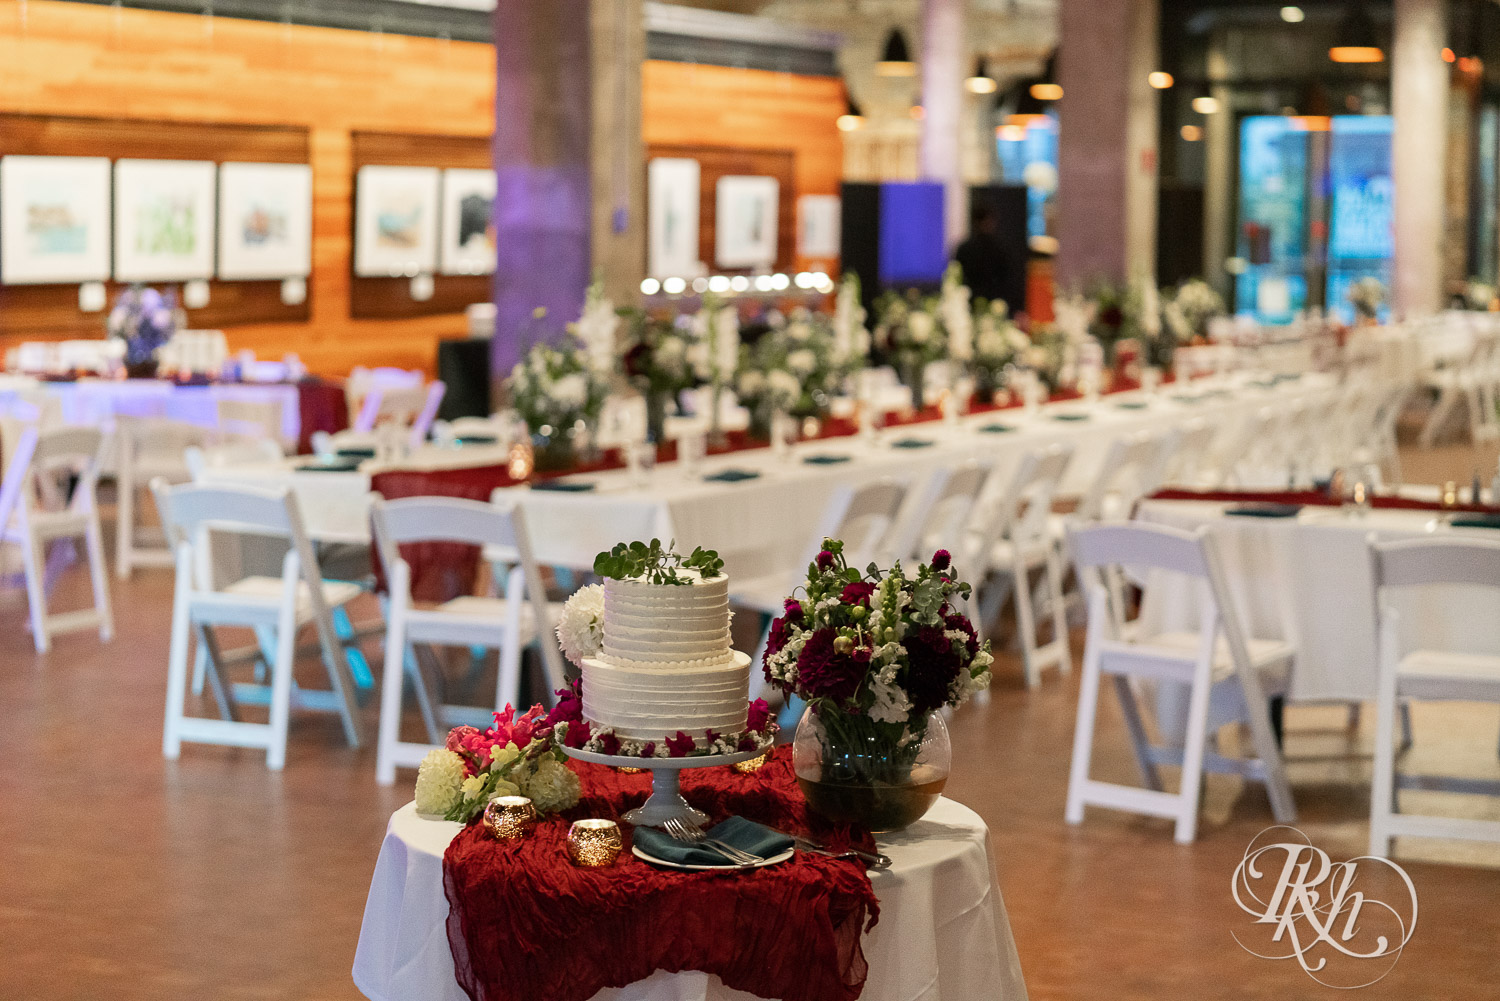 Wedding reception setup at Mill City Museum in Minneapolis, Minnesota.